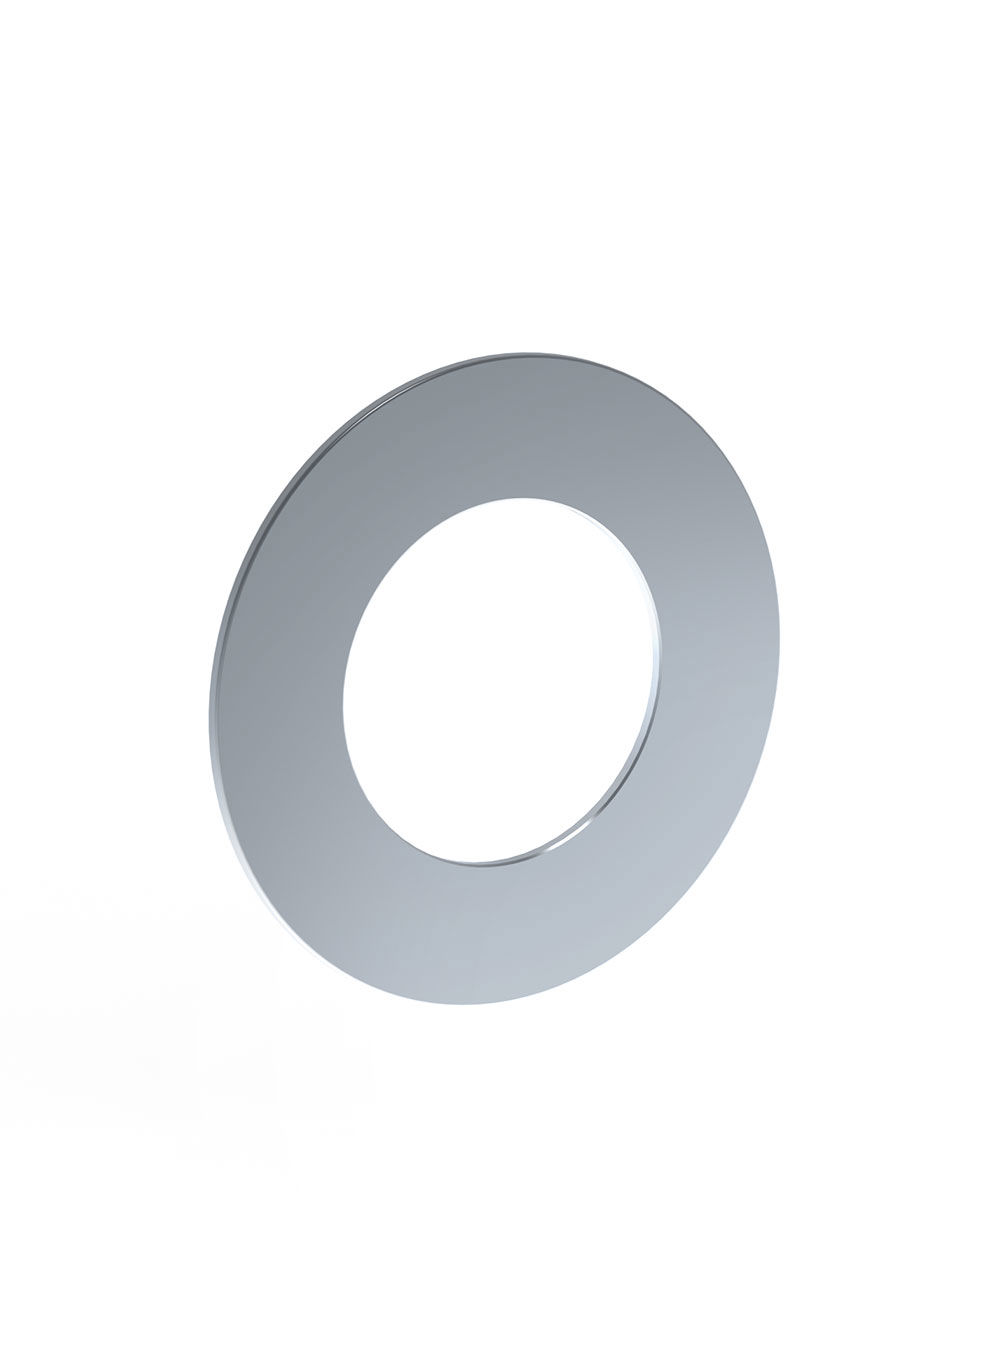 001: 60 mm circular flange. Hole Ø30 mm. 